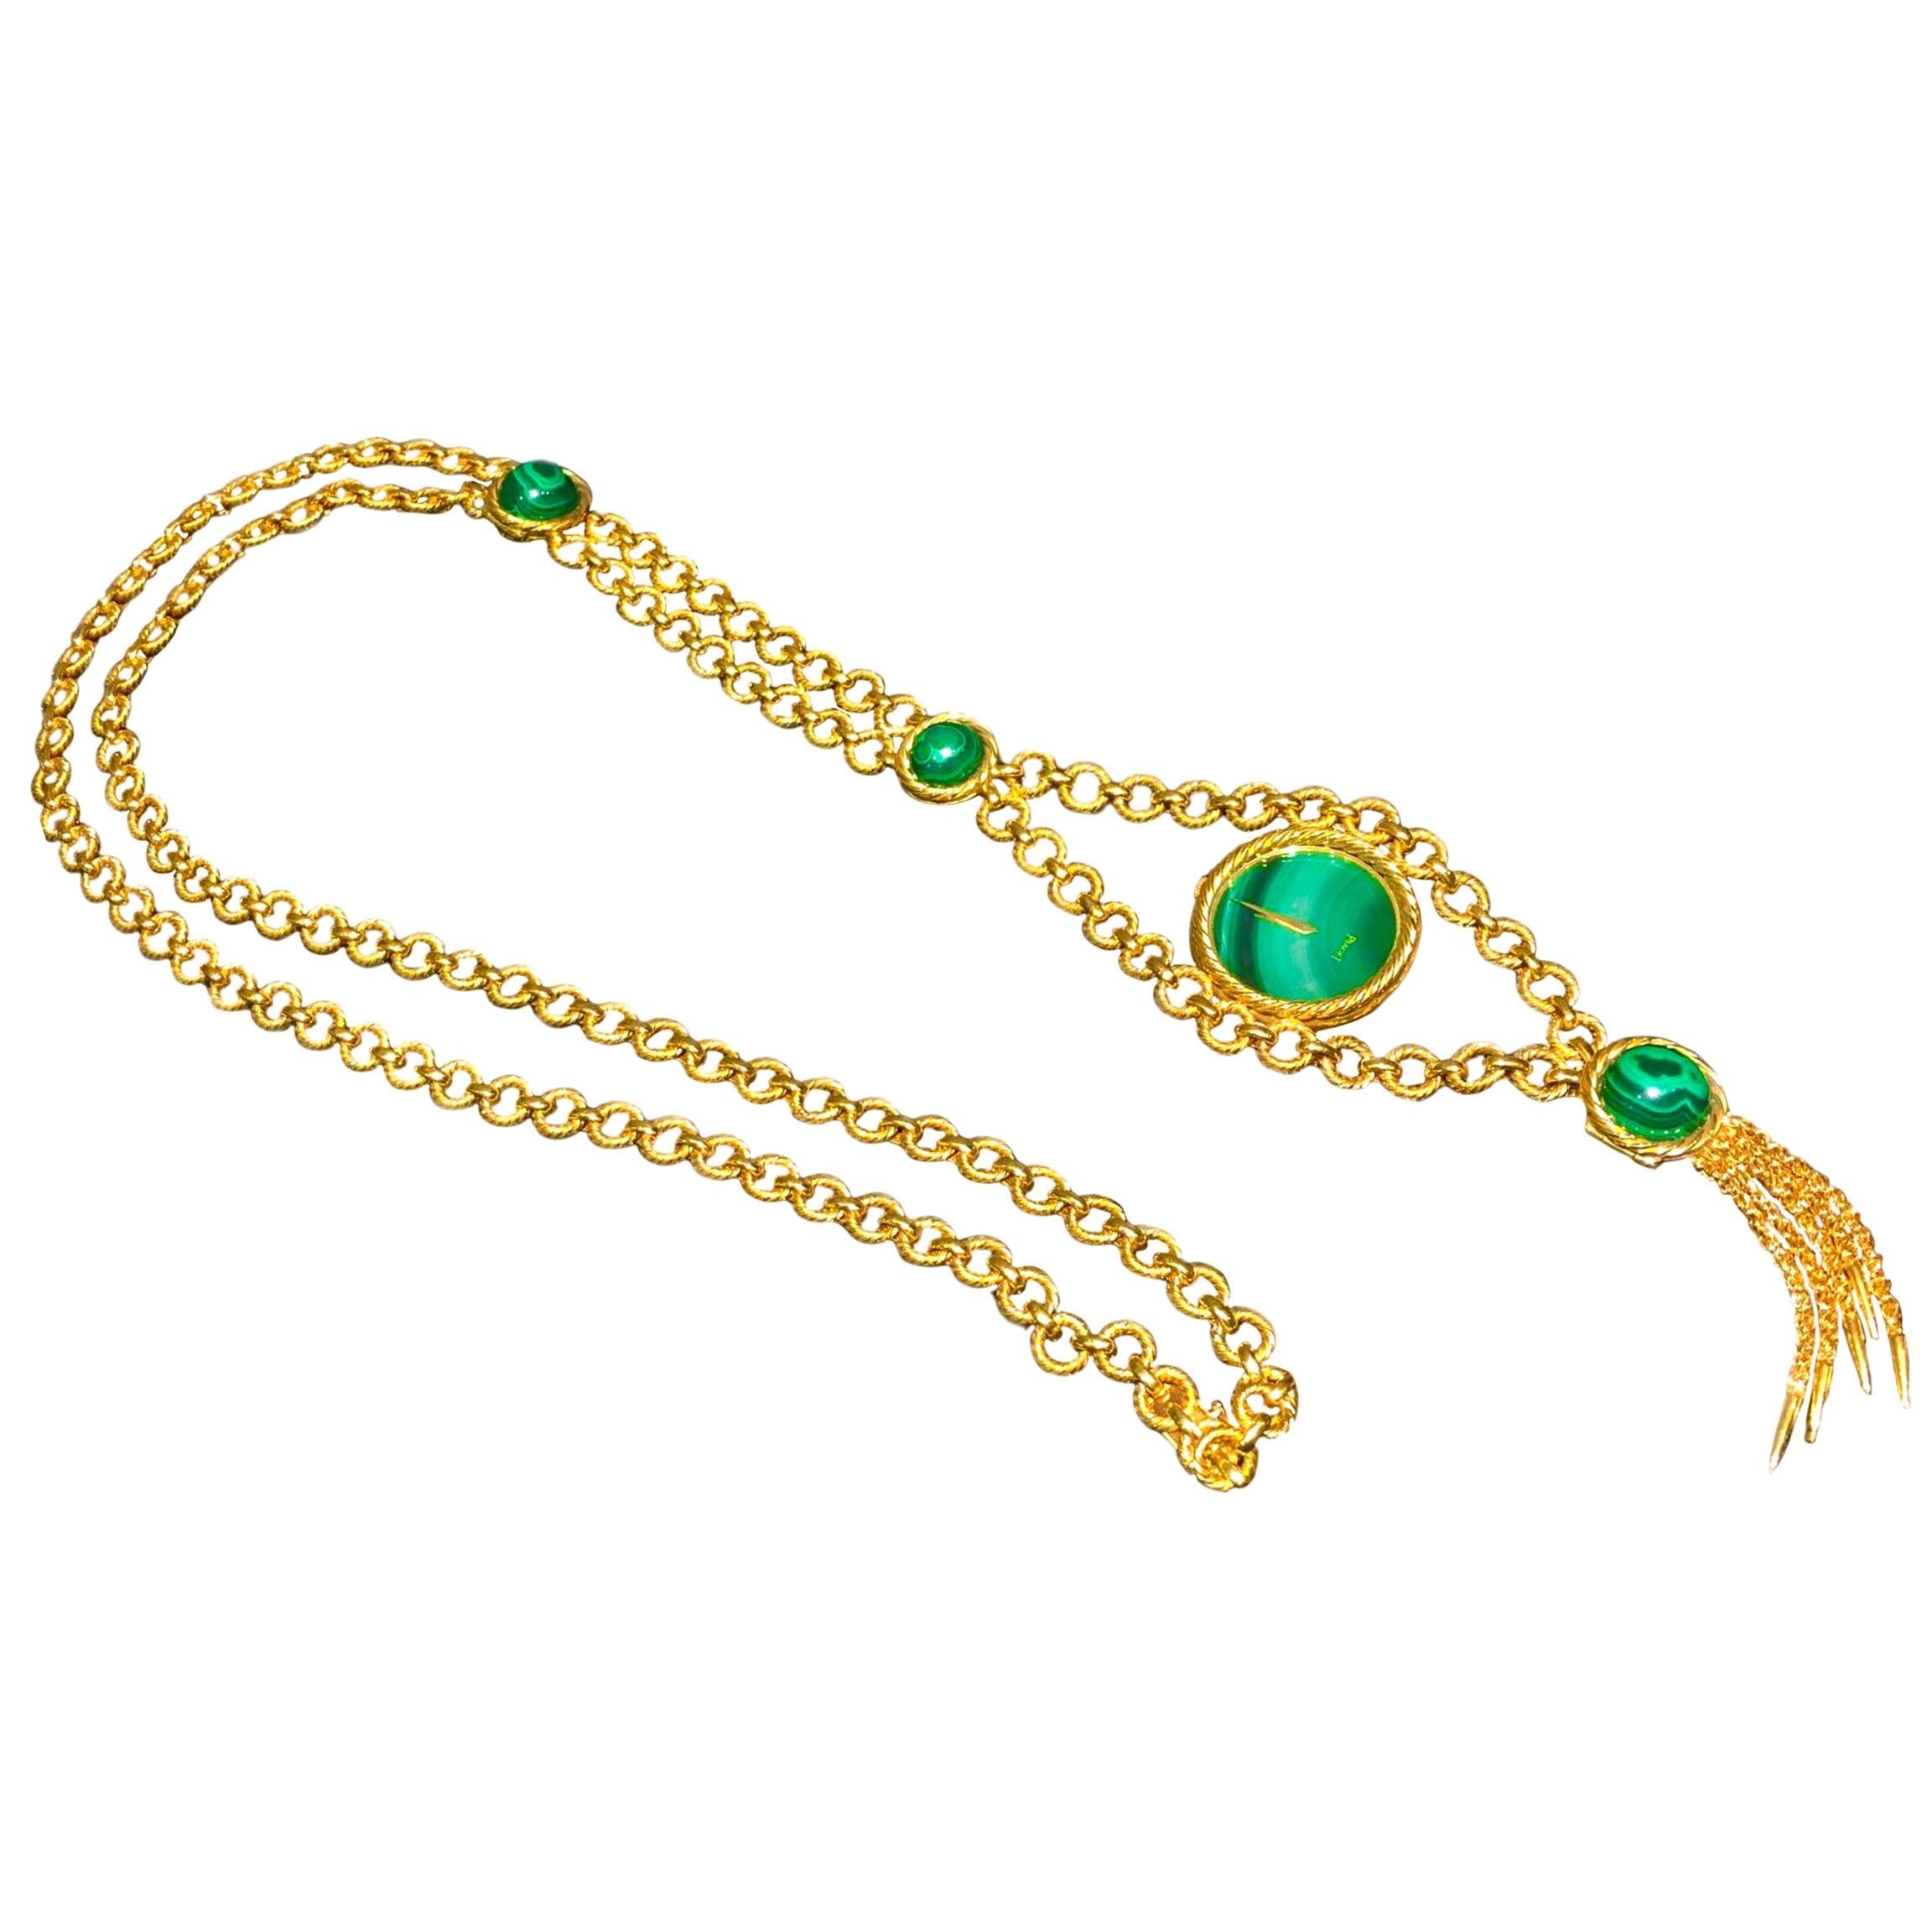 Very Rare 1960s-1970s Piaget 18 Karat Gold Malachite Necklace and Bracelet Watch